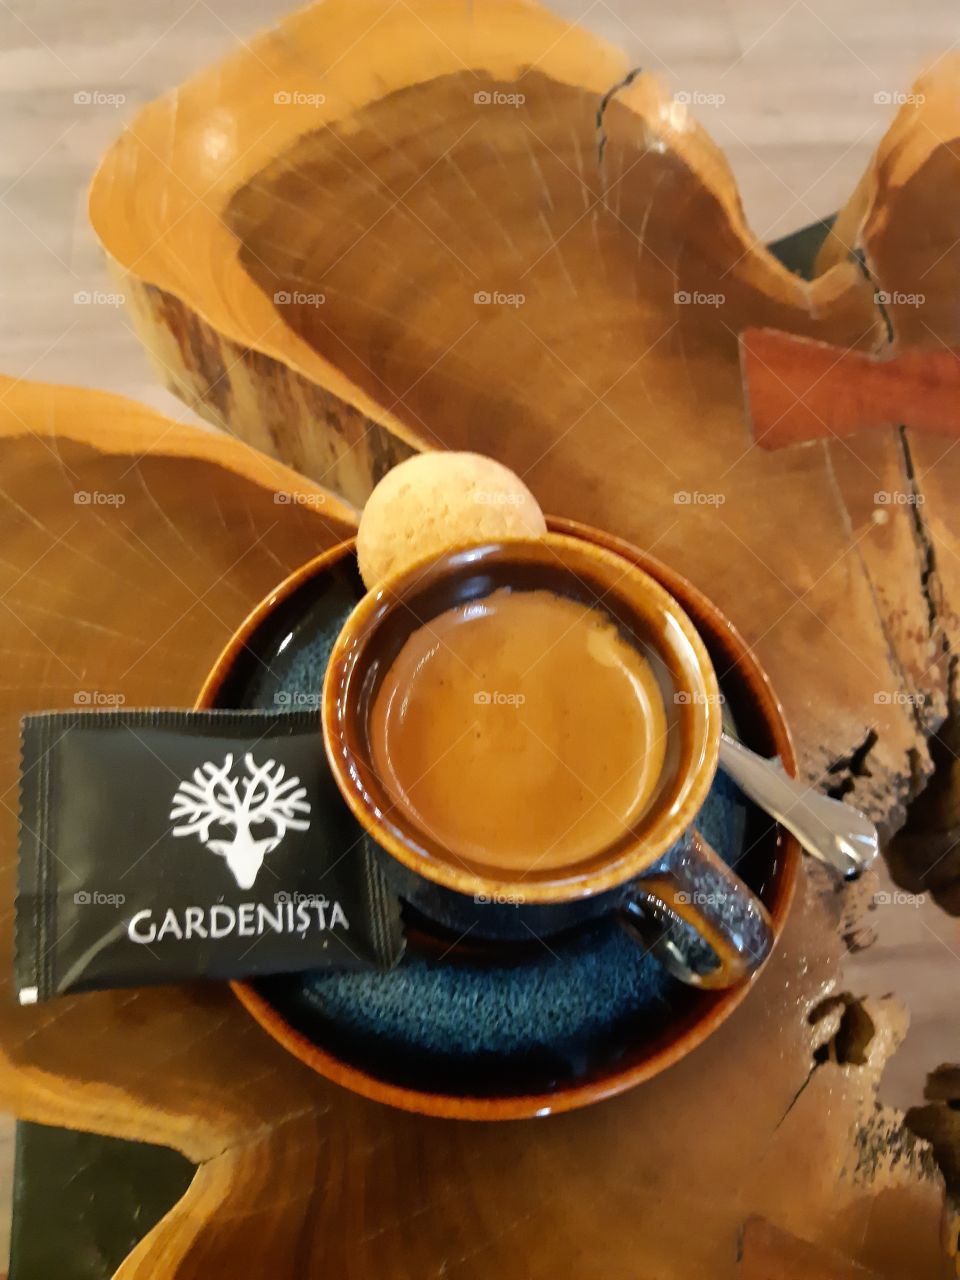 Gardenista espresso!